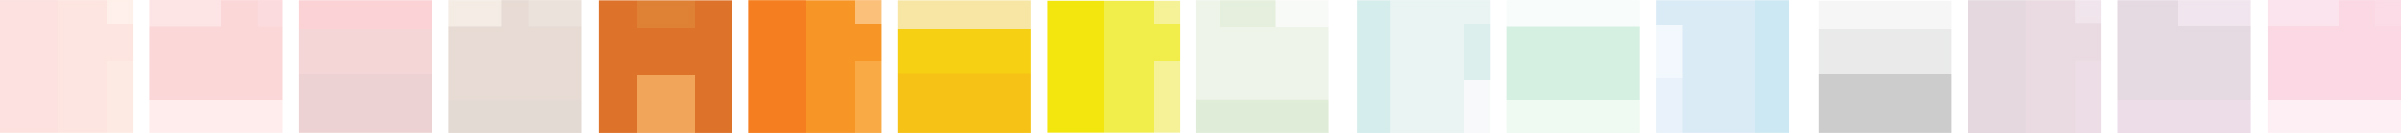 Color Bar Blocks_Yellow